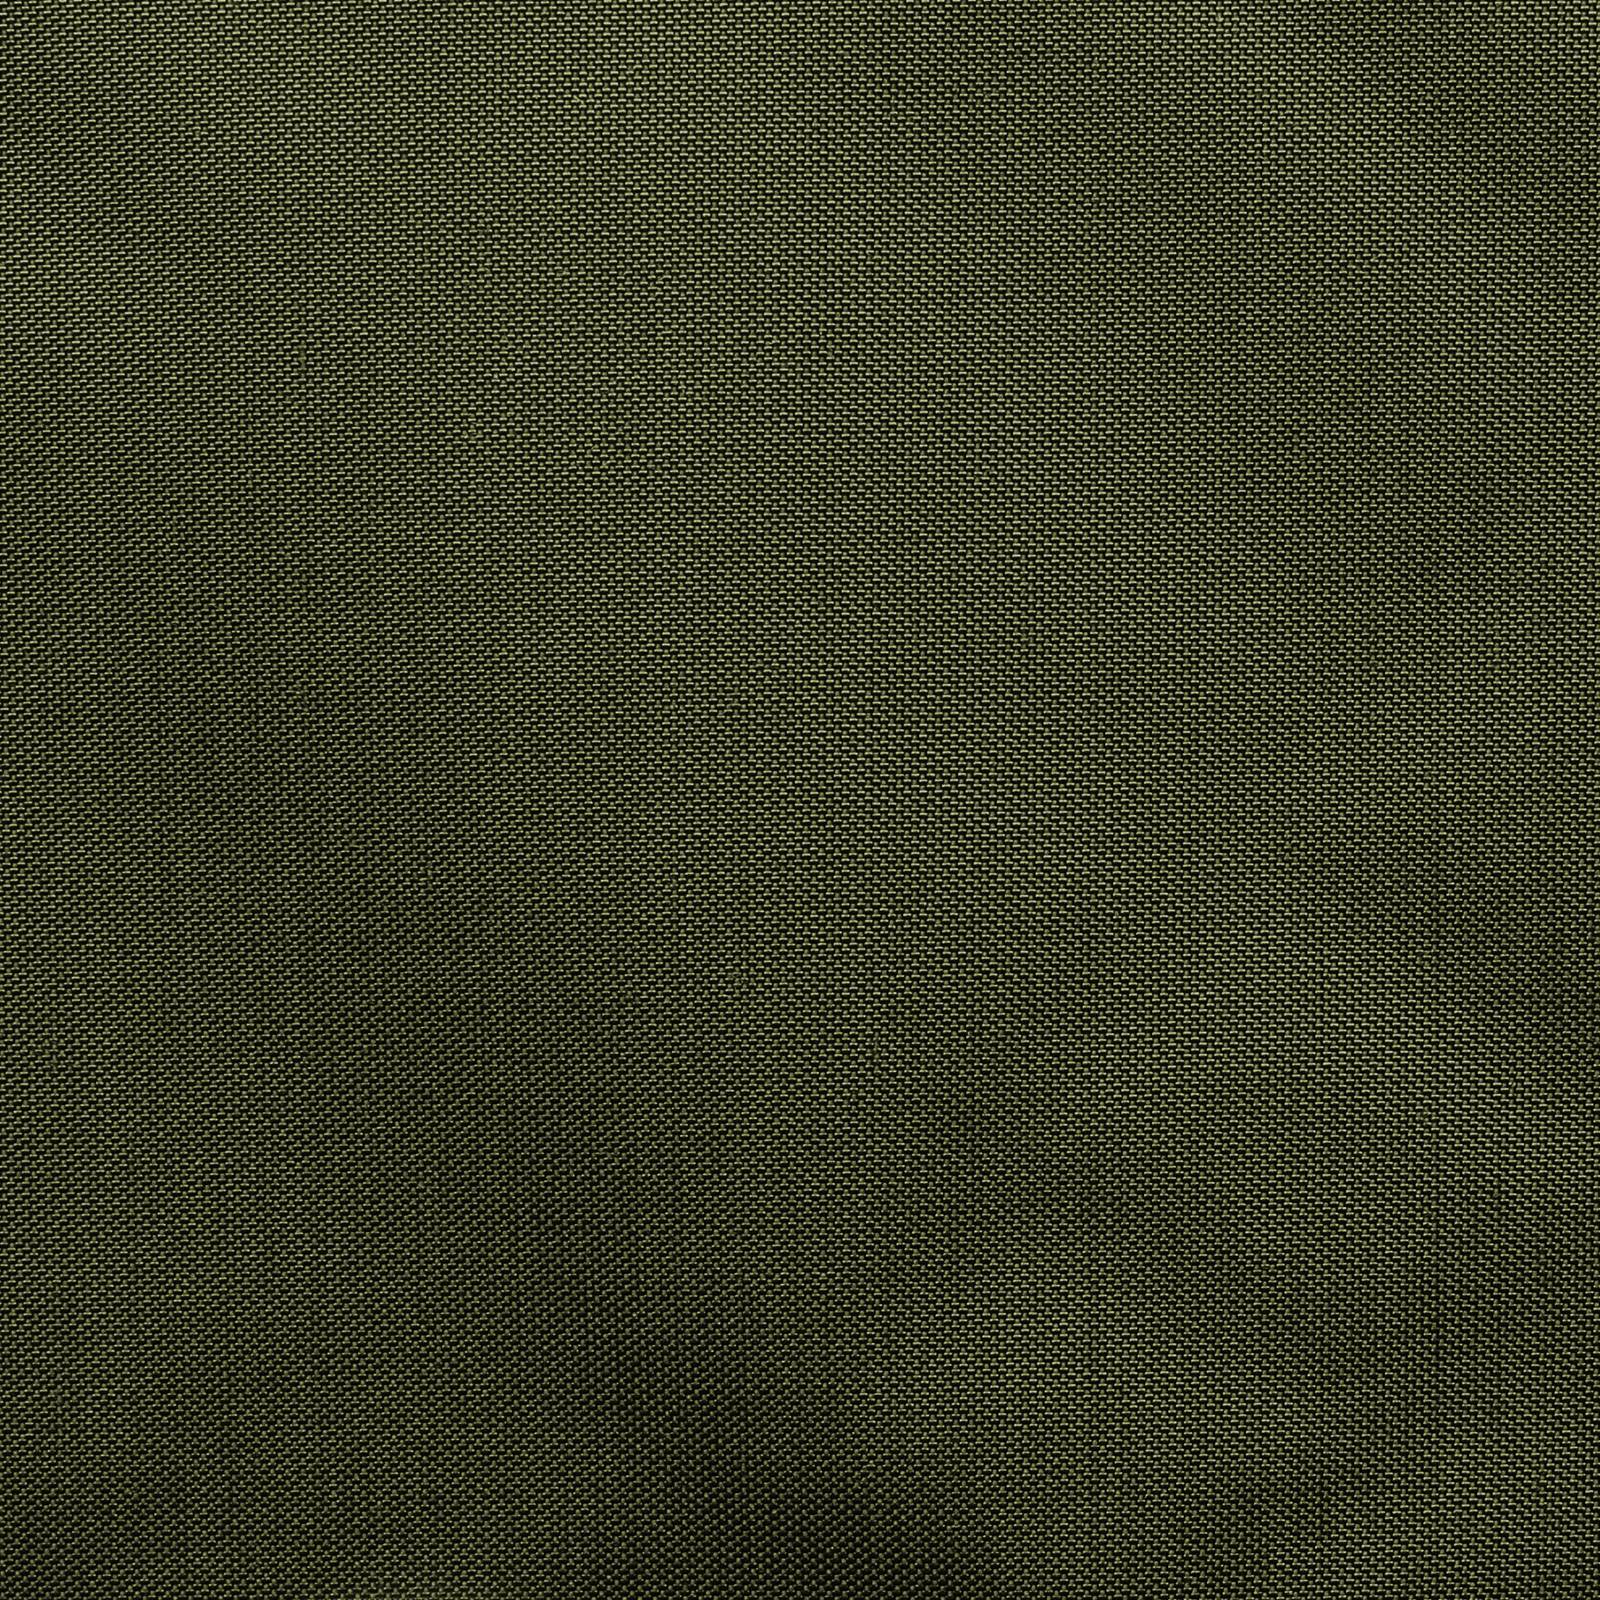 Microfibre - flag fabric - olive